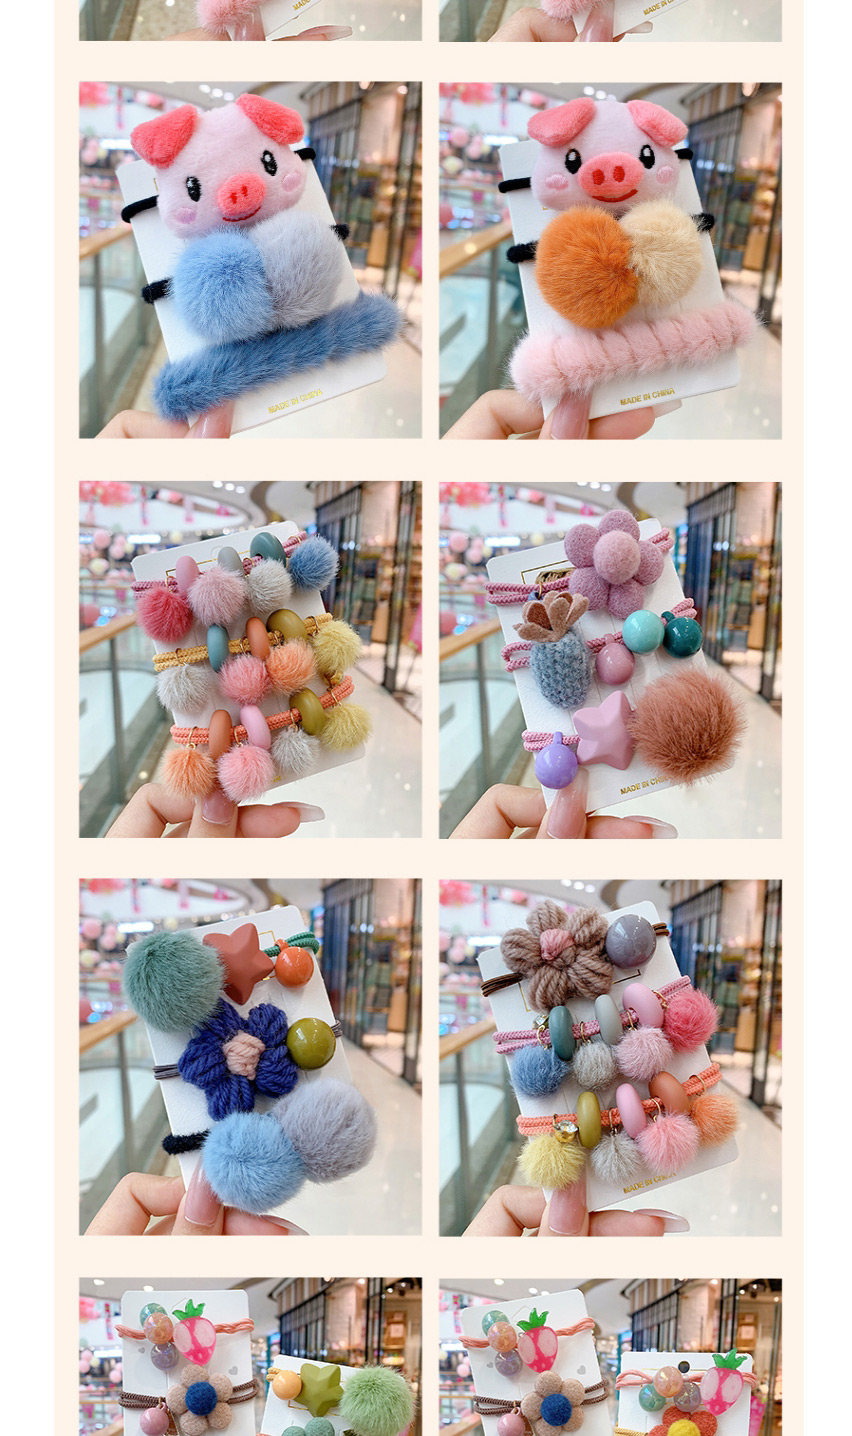 Fashion 3-piece Hair Ball Set Plush Ball Rabbit Fruit Flower Hit Color Childrens Hair Rope,Kids Accessories